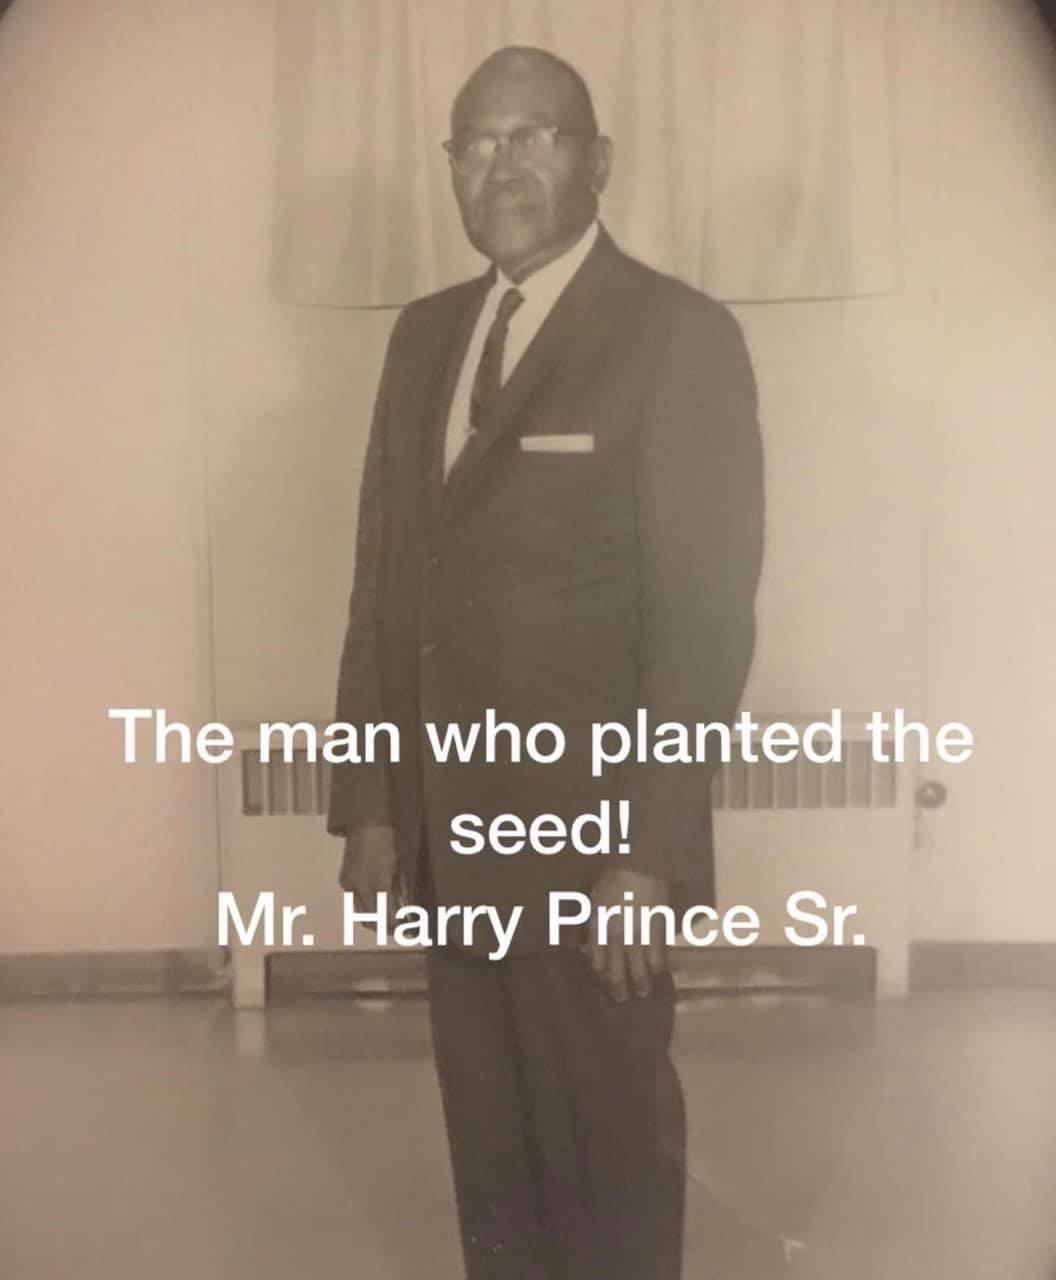 Harry Prince Sr. (Photo provided by Teresa Chapman)